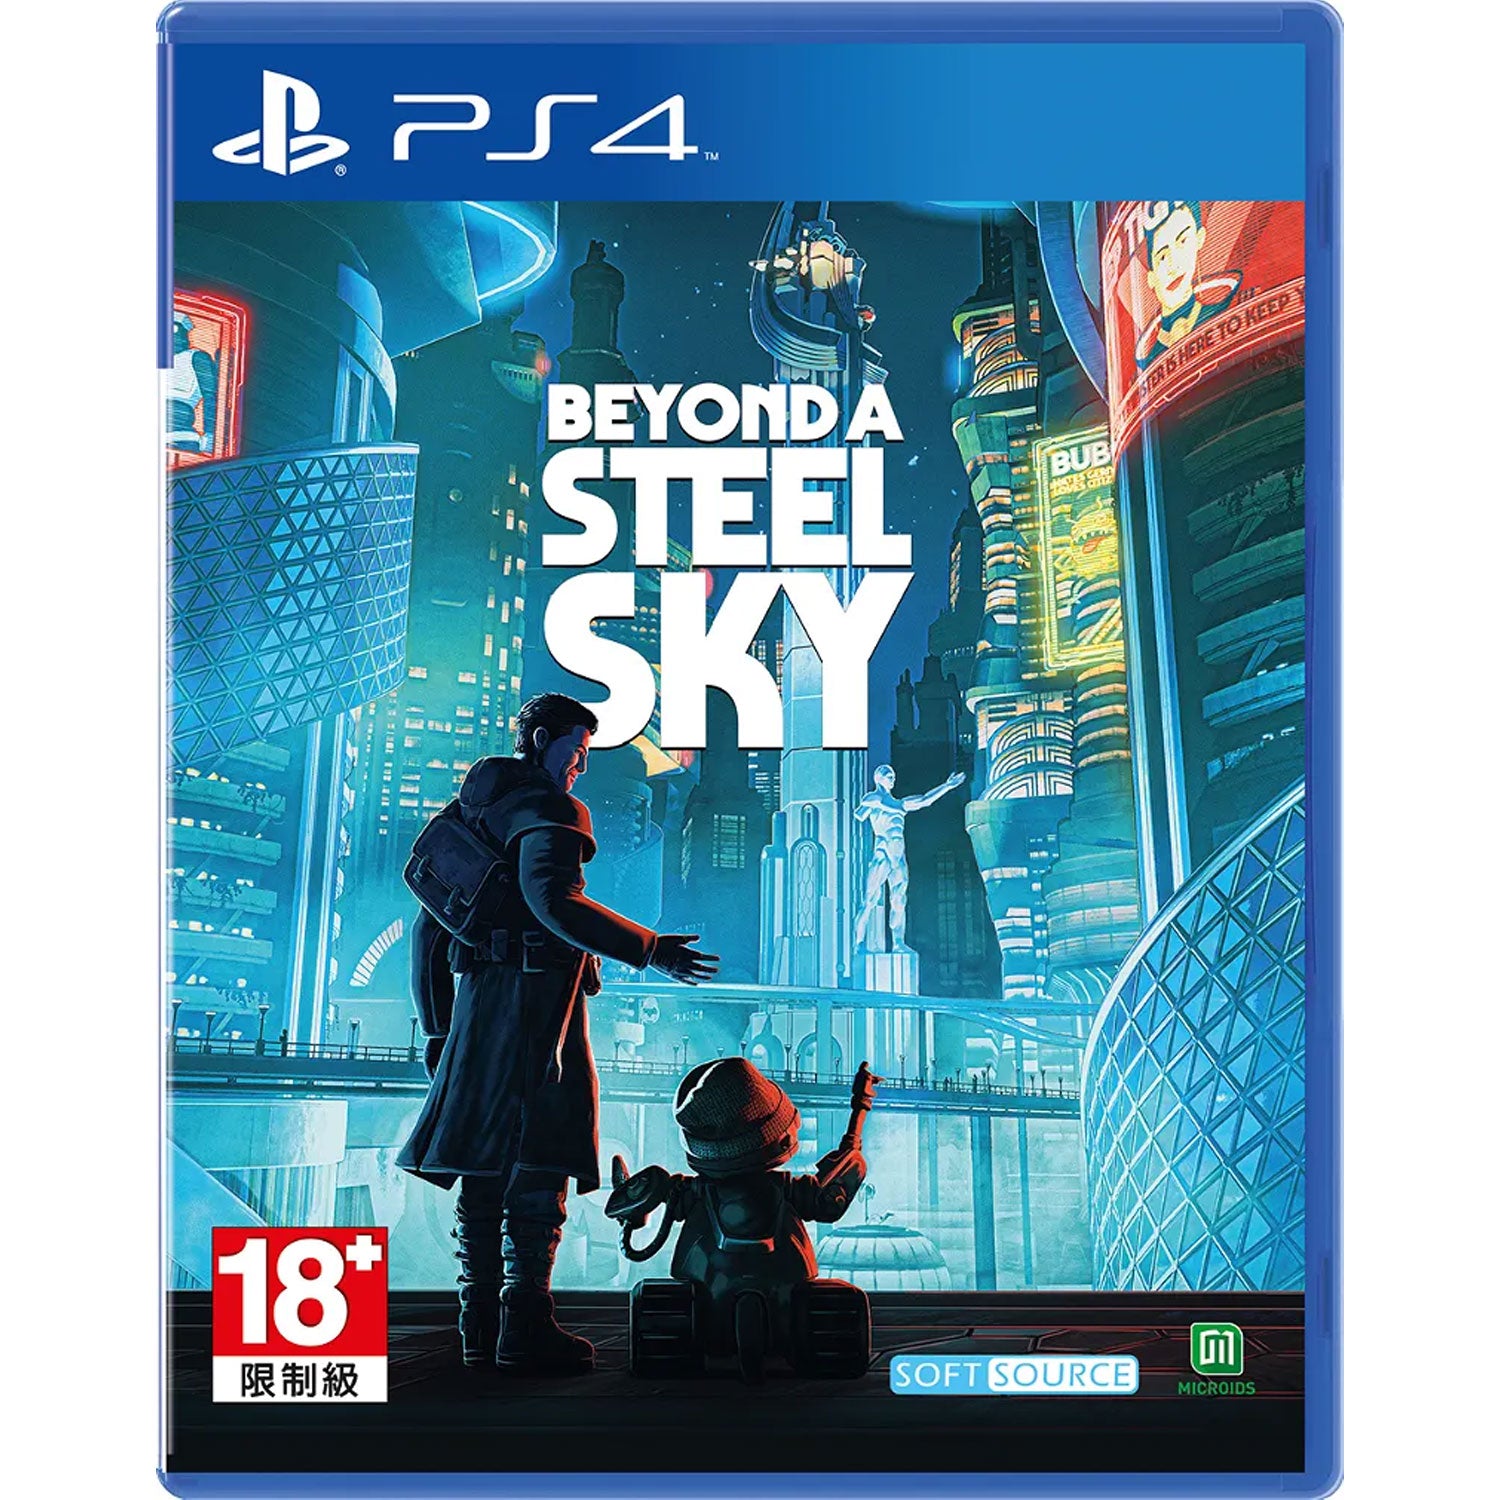 PS4 Beyond a Steel Sky